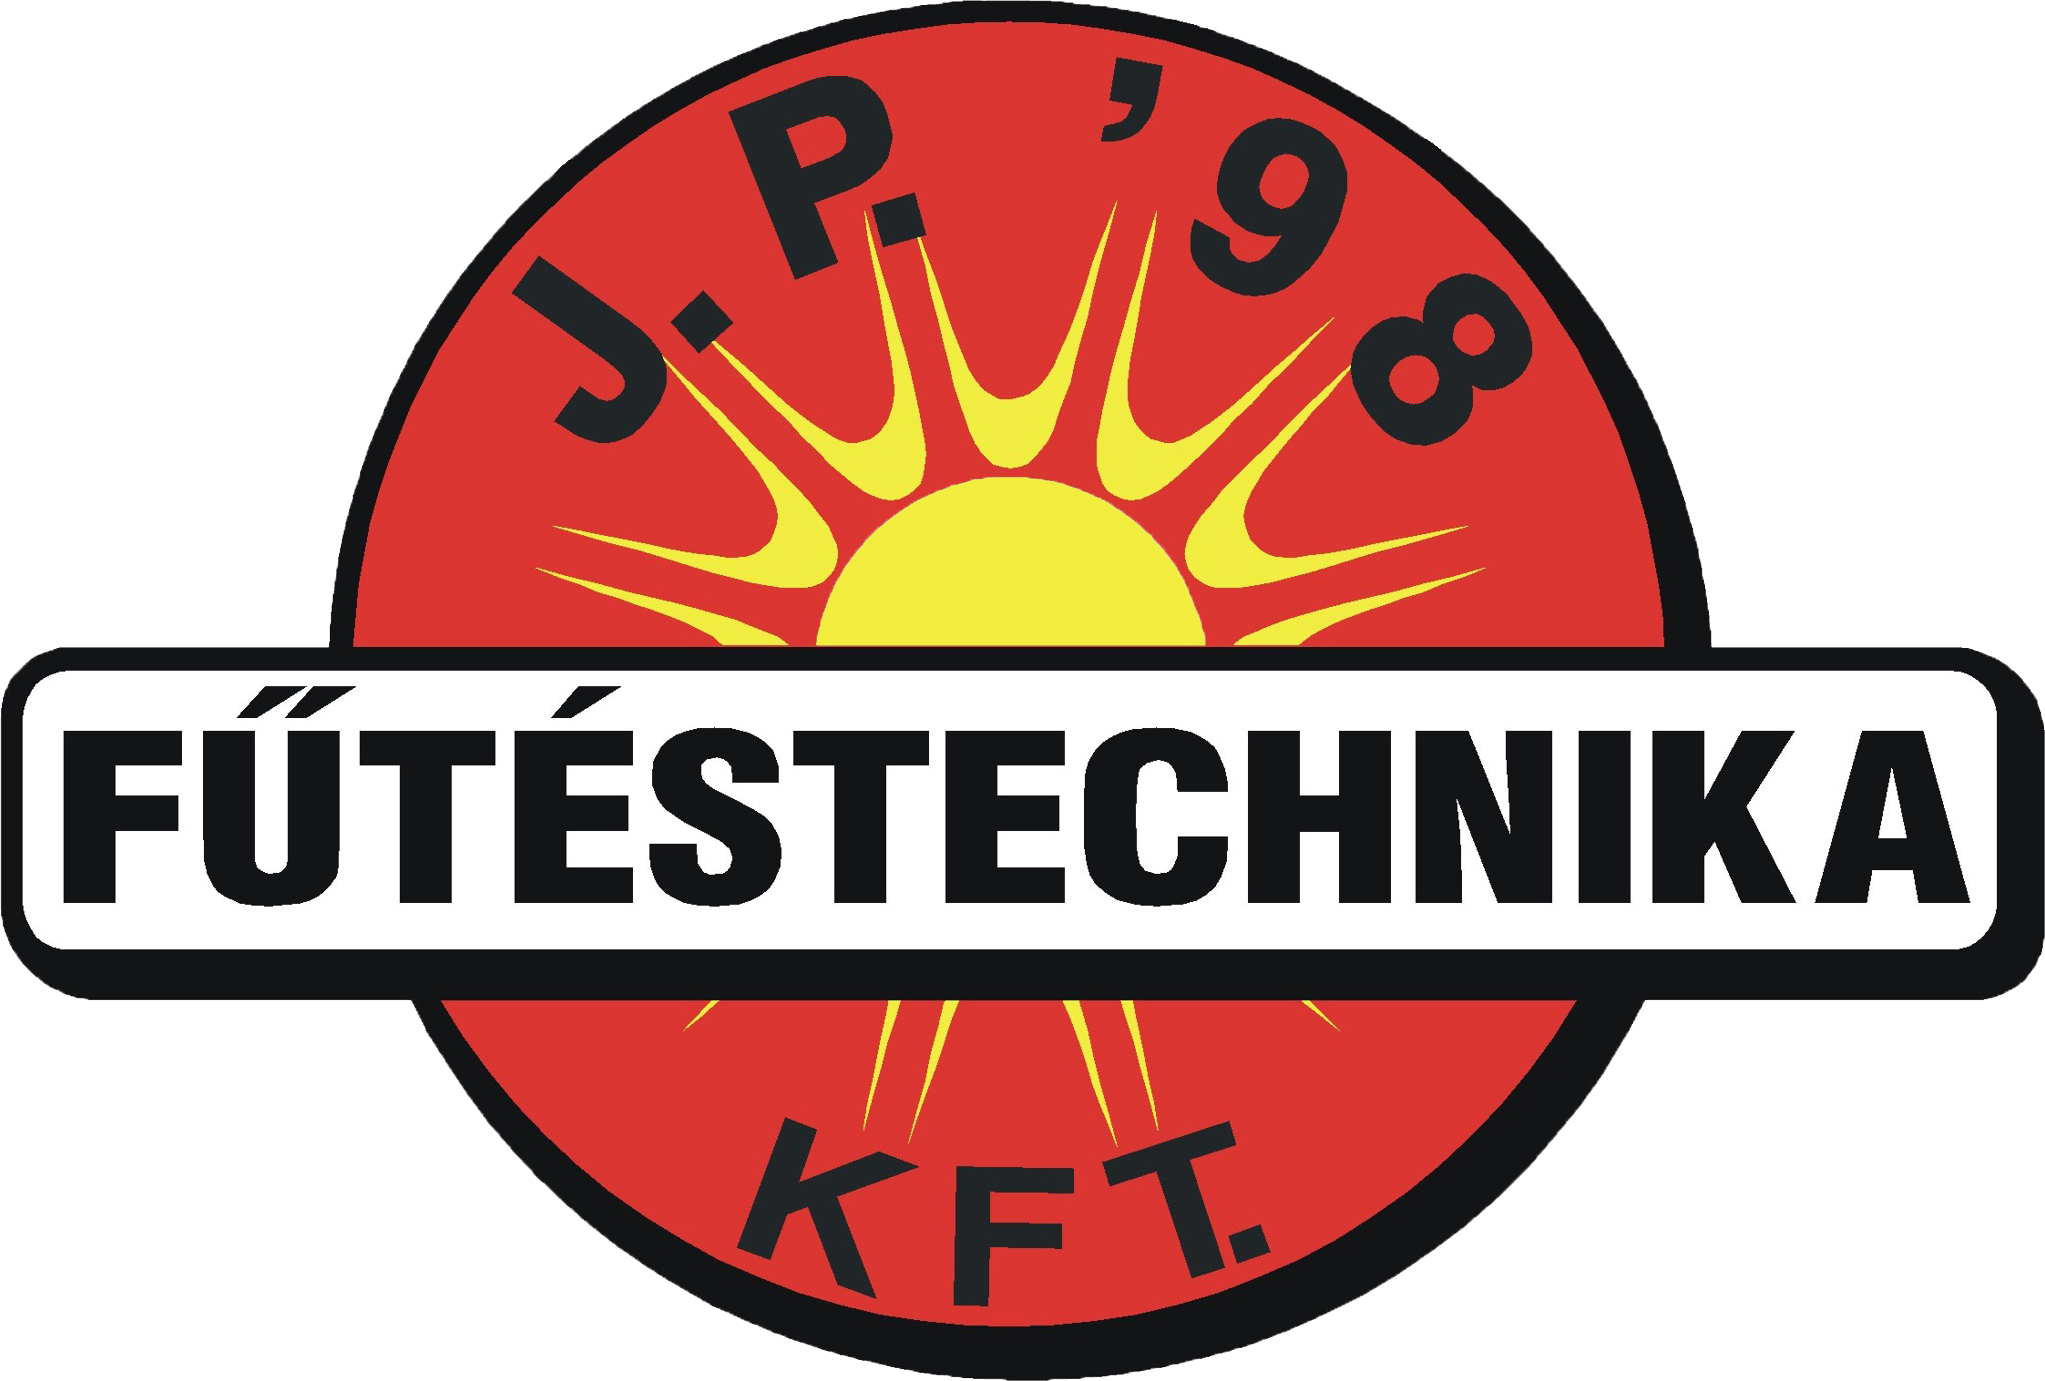 J.P. 98 Fűtéstechnika Kft.